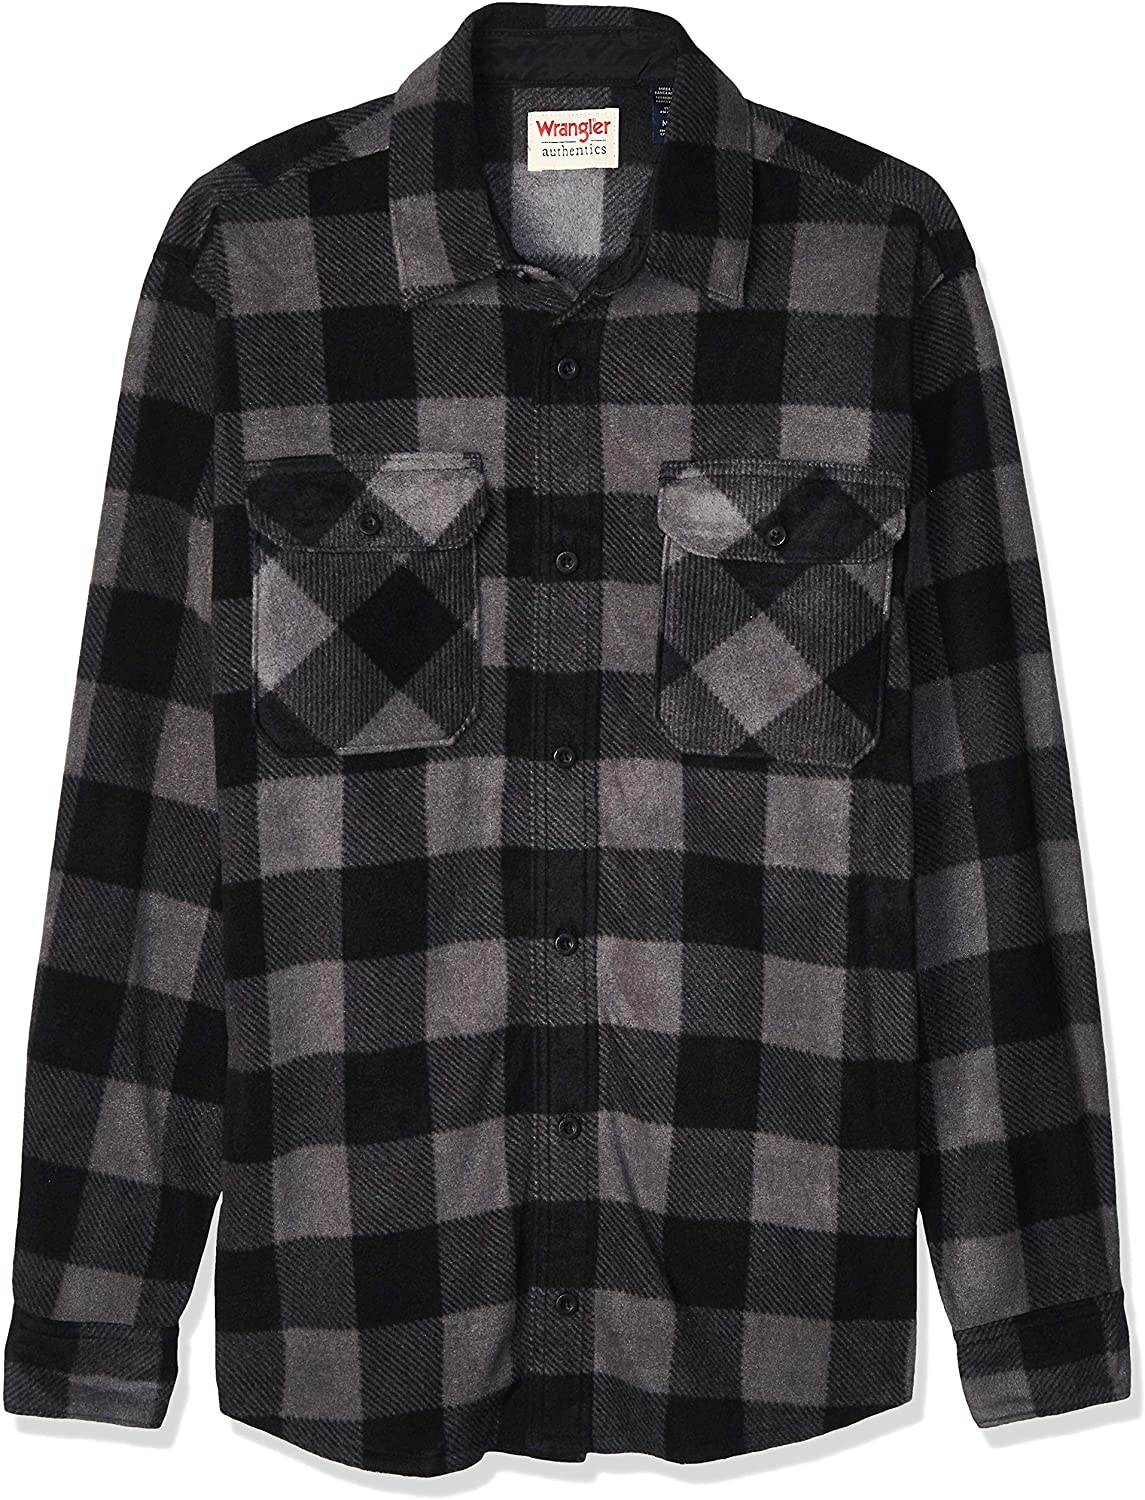 Wrangler Authentics Men's Long Sleeve Heavyweight Plaid Fleece Shirt | eBay